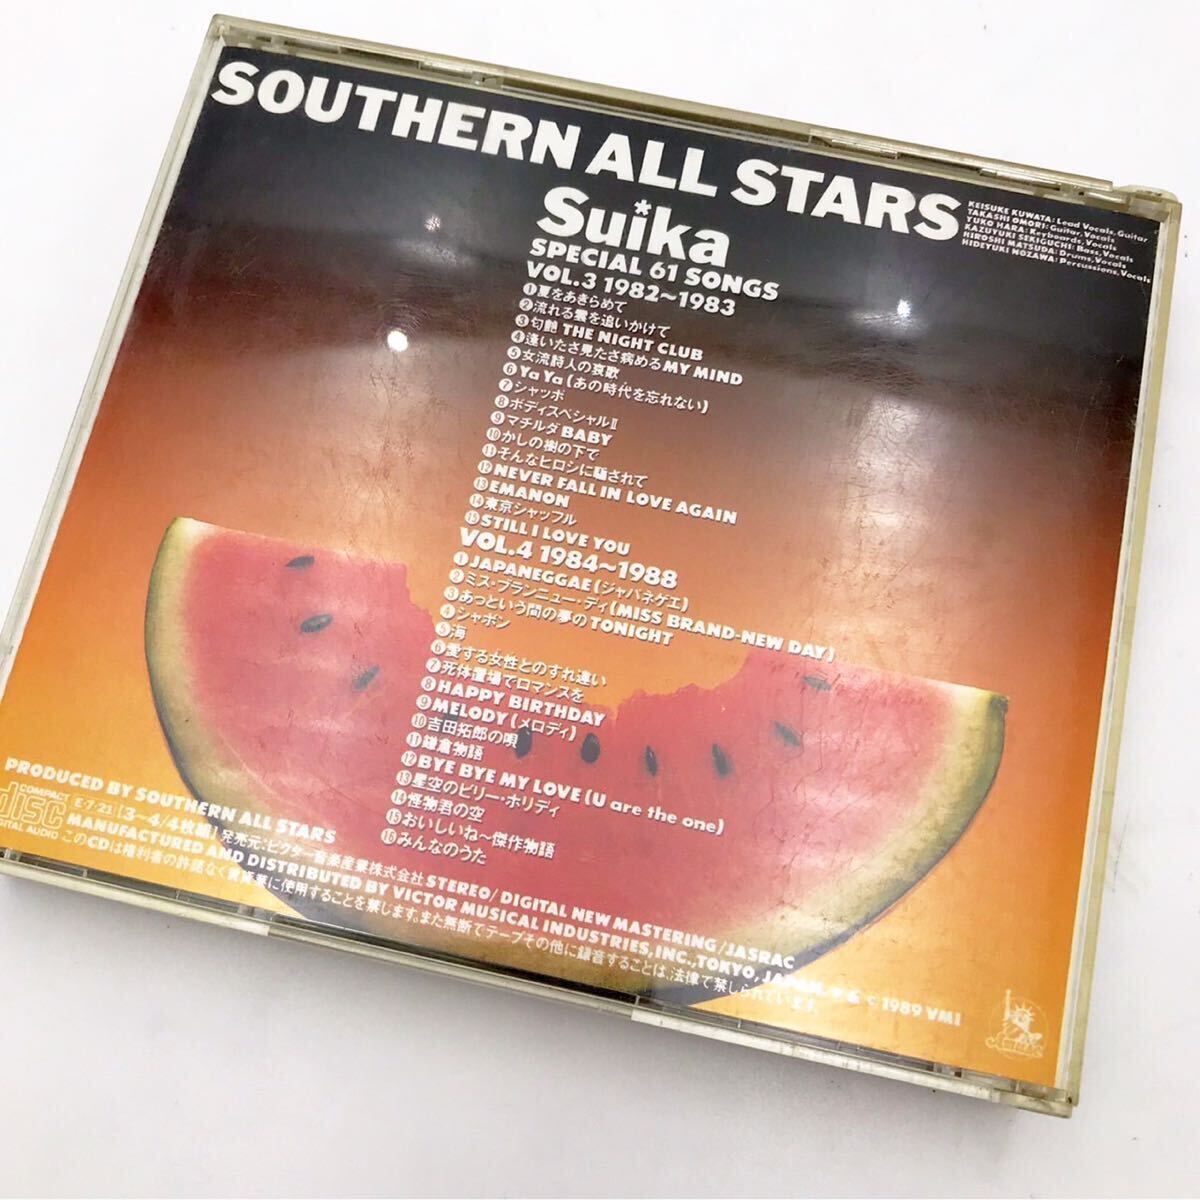  Southern All Stars Suika SOUTHERN ALL STARS SPECIAL 61 SONGS альбом sa The n тутовик рисовое поле ..... ограничение в жестяной банке 4CD[NK6037]